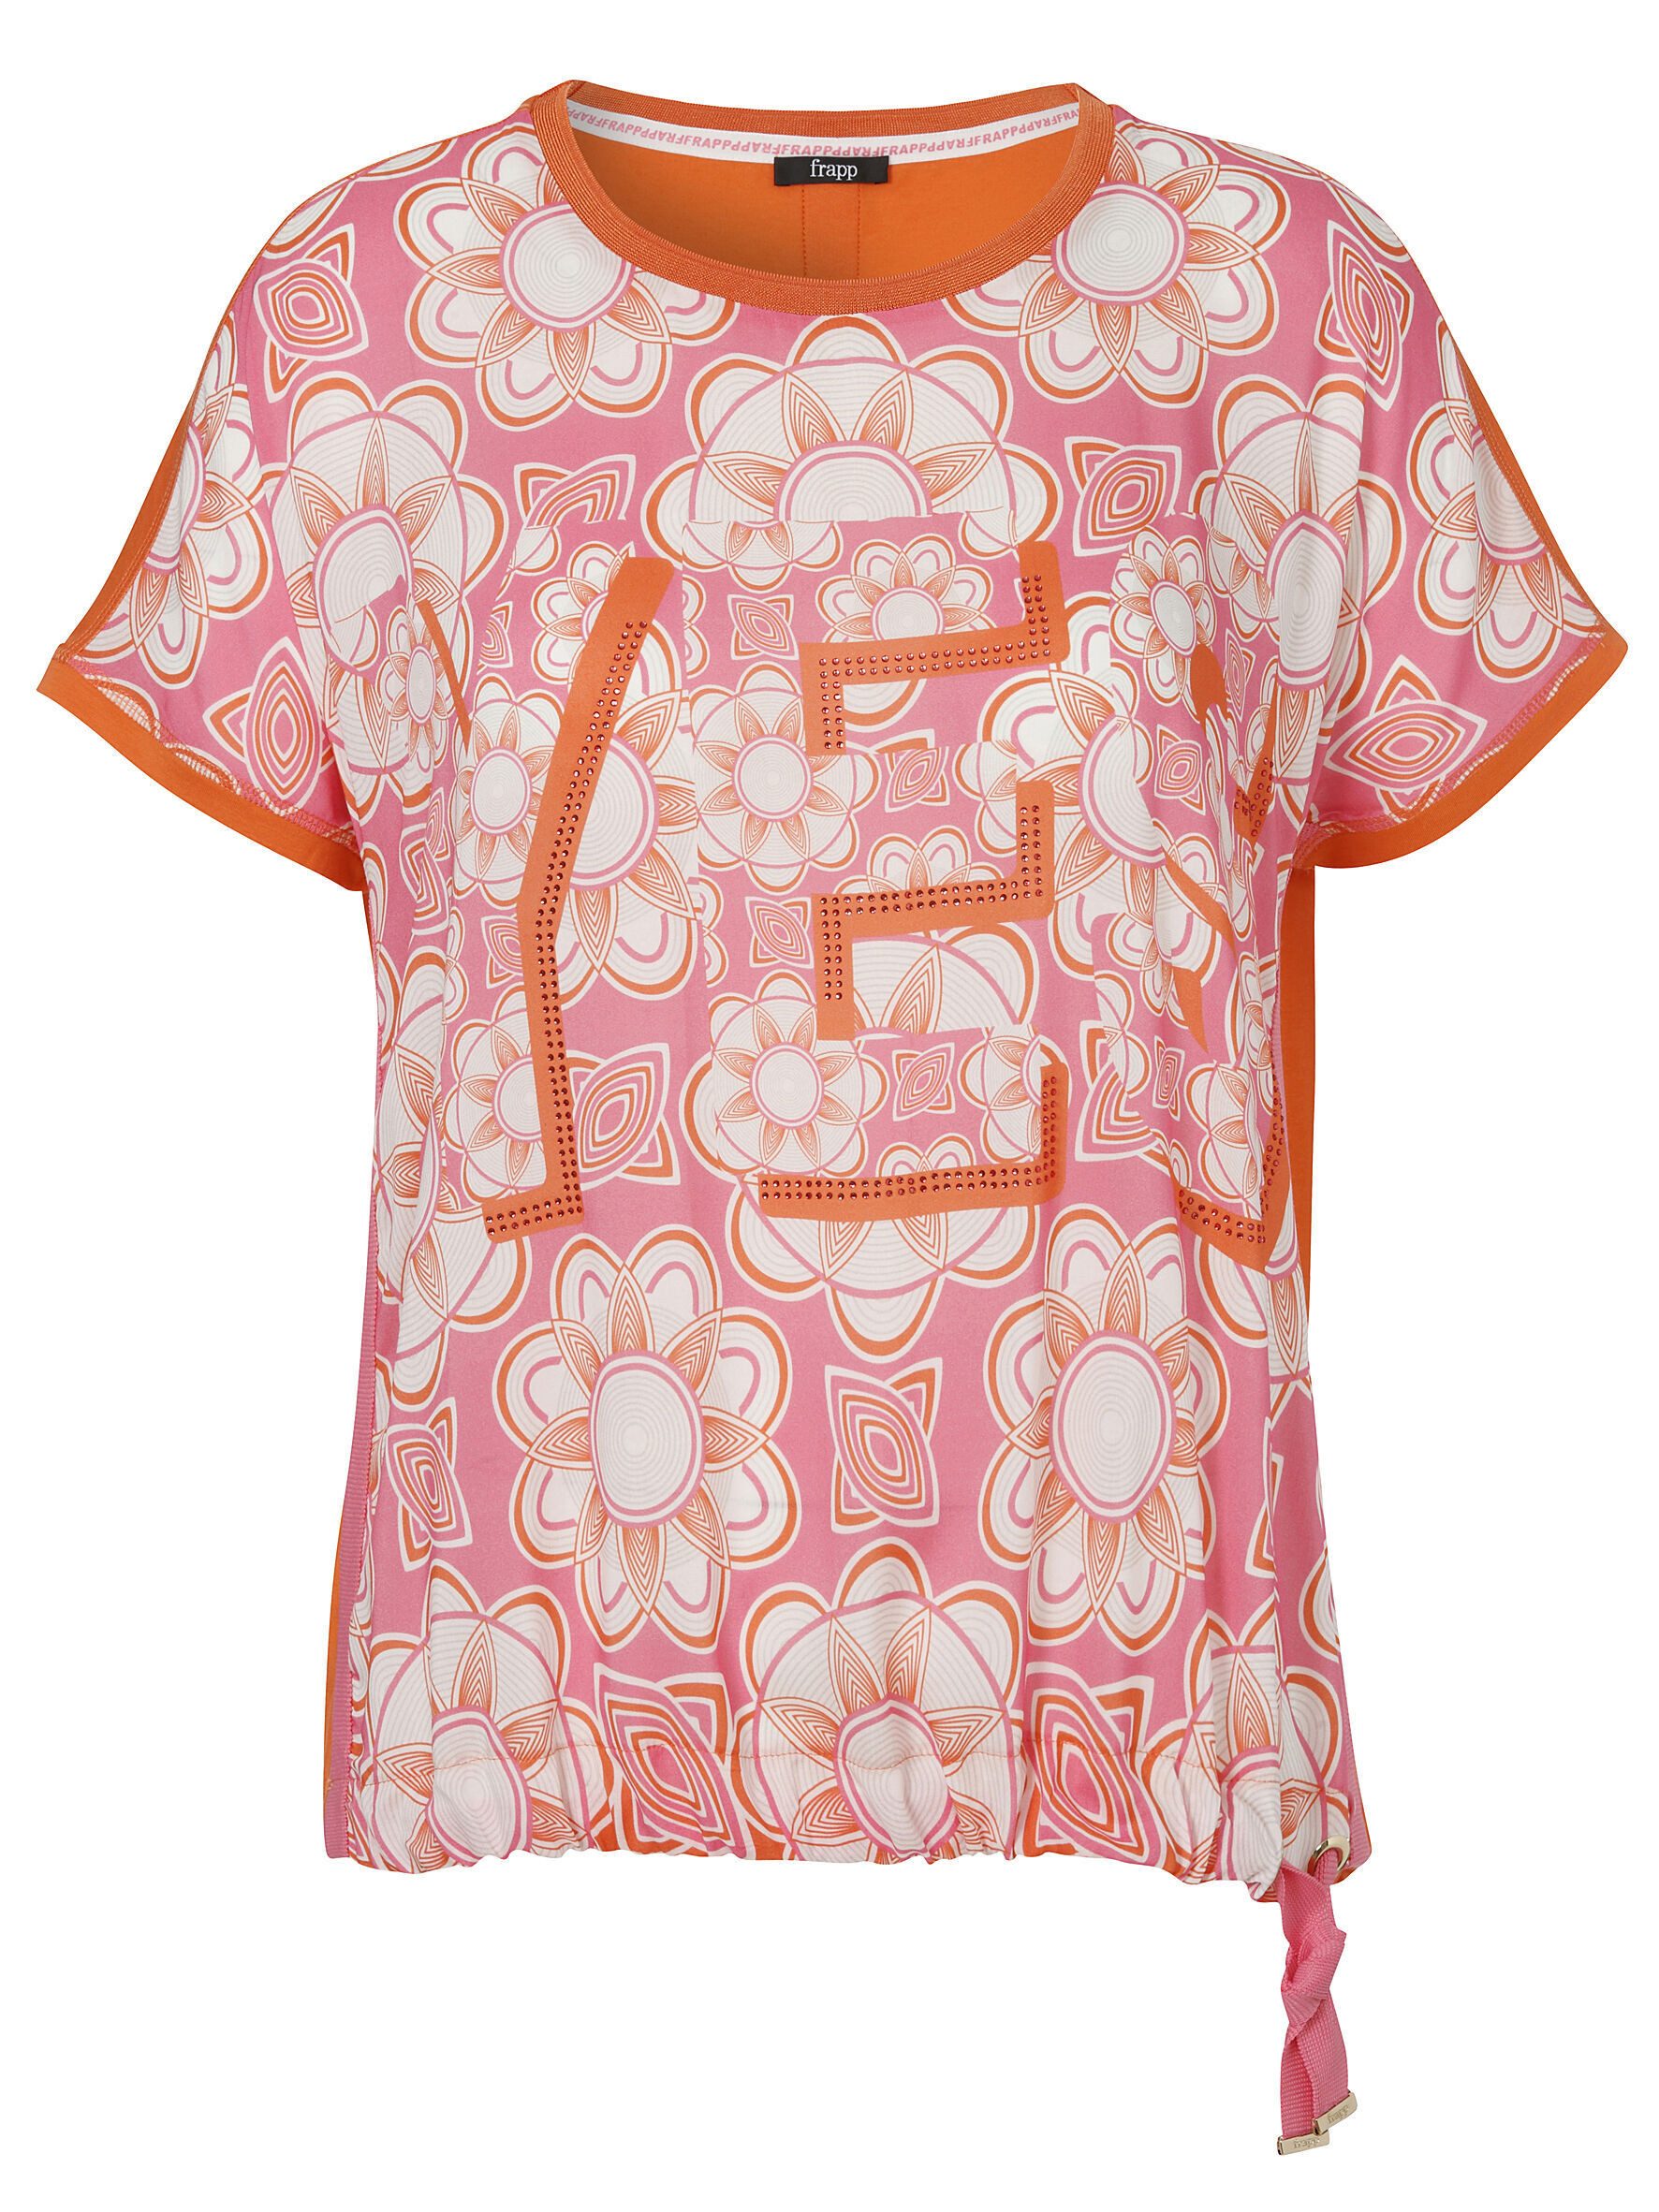 FRAPP Klassische Bluse mit floralem Front-Print